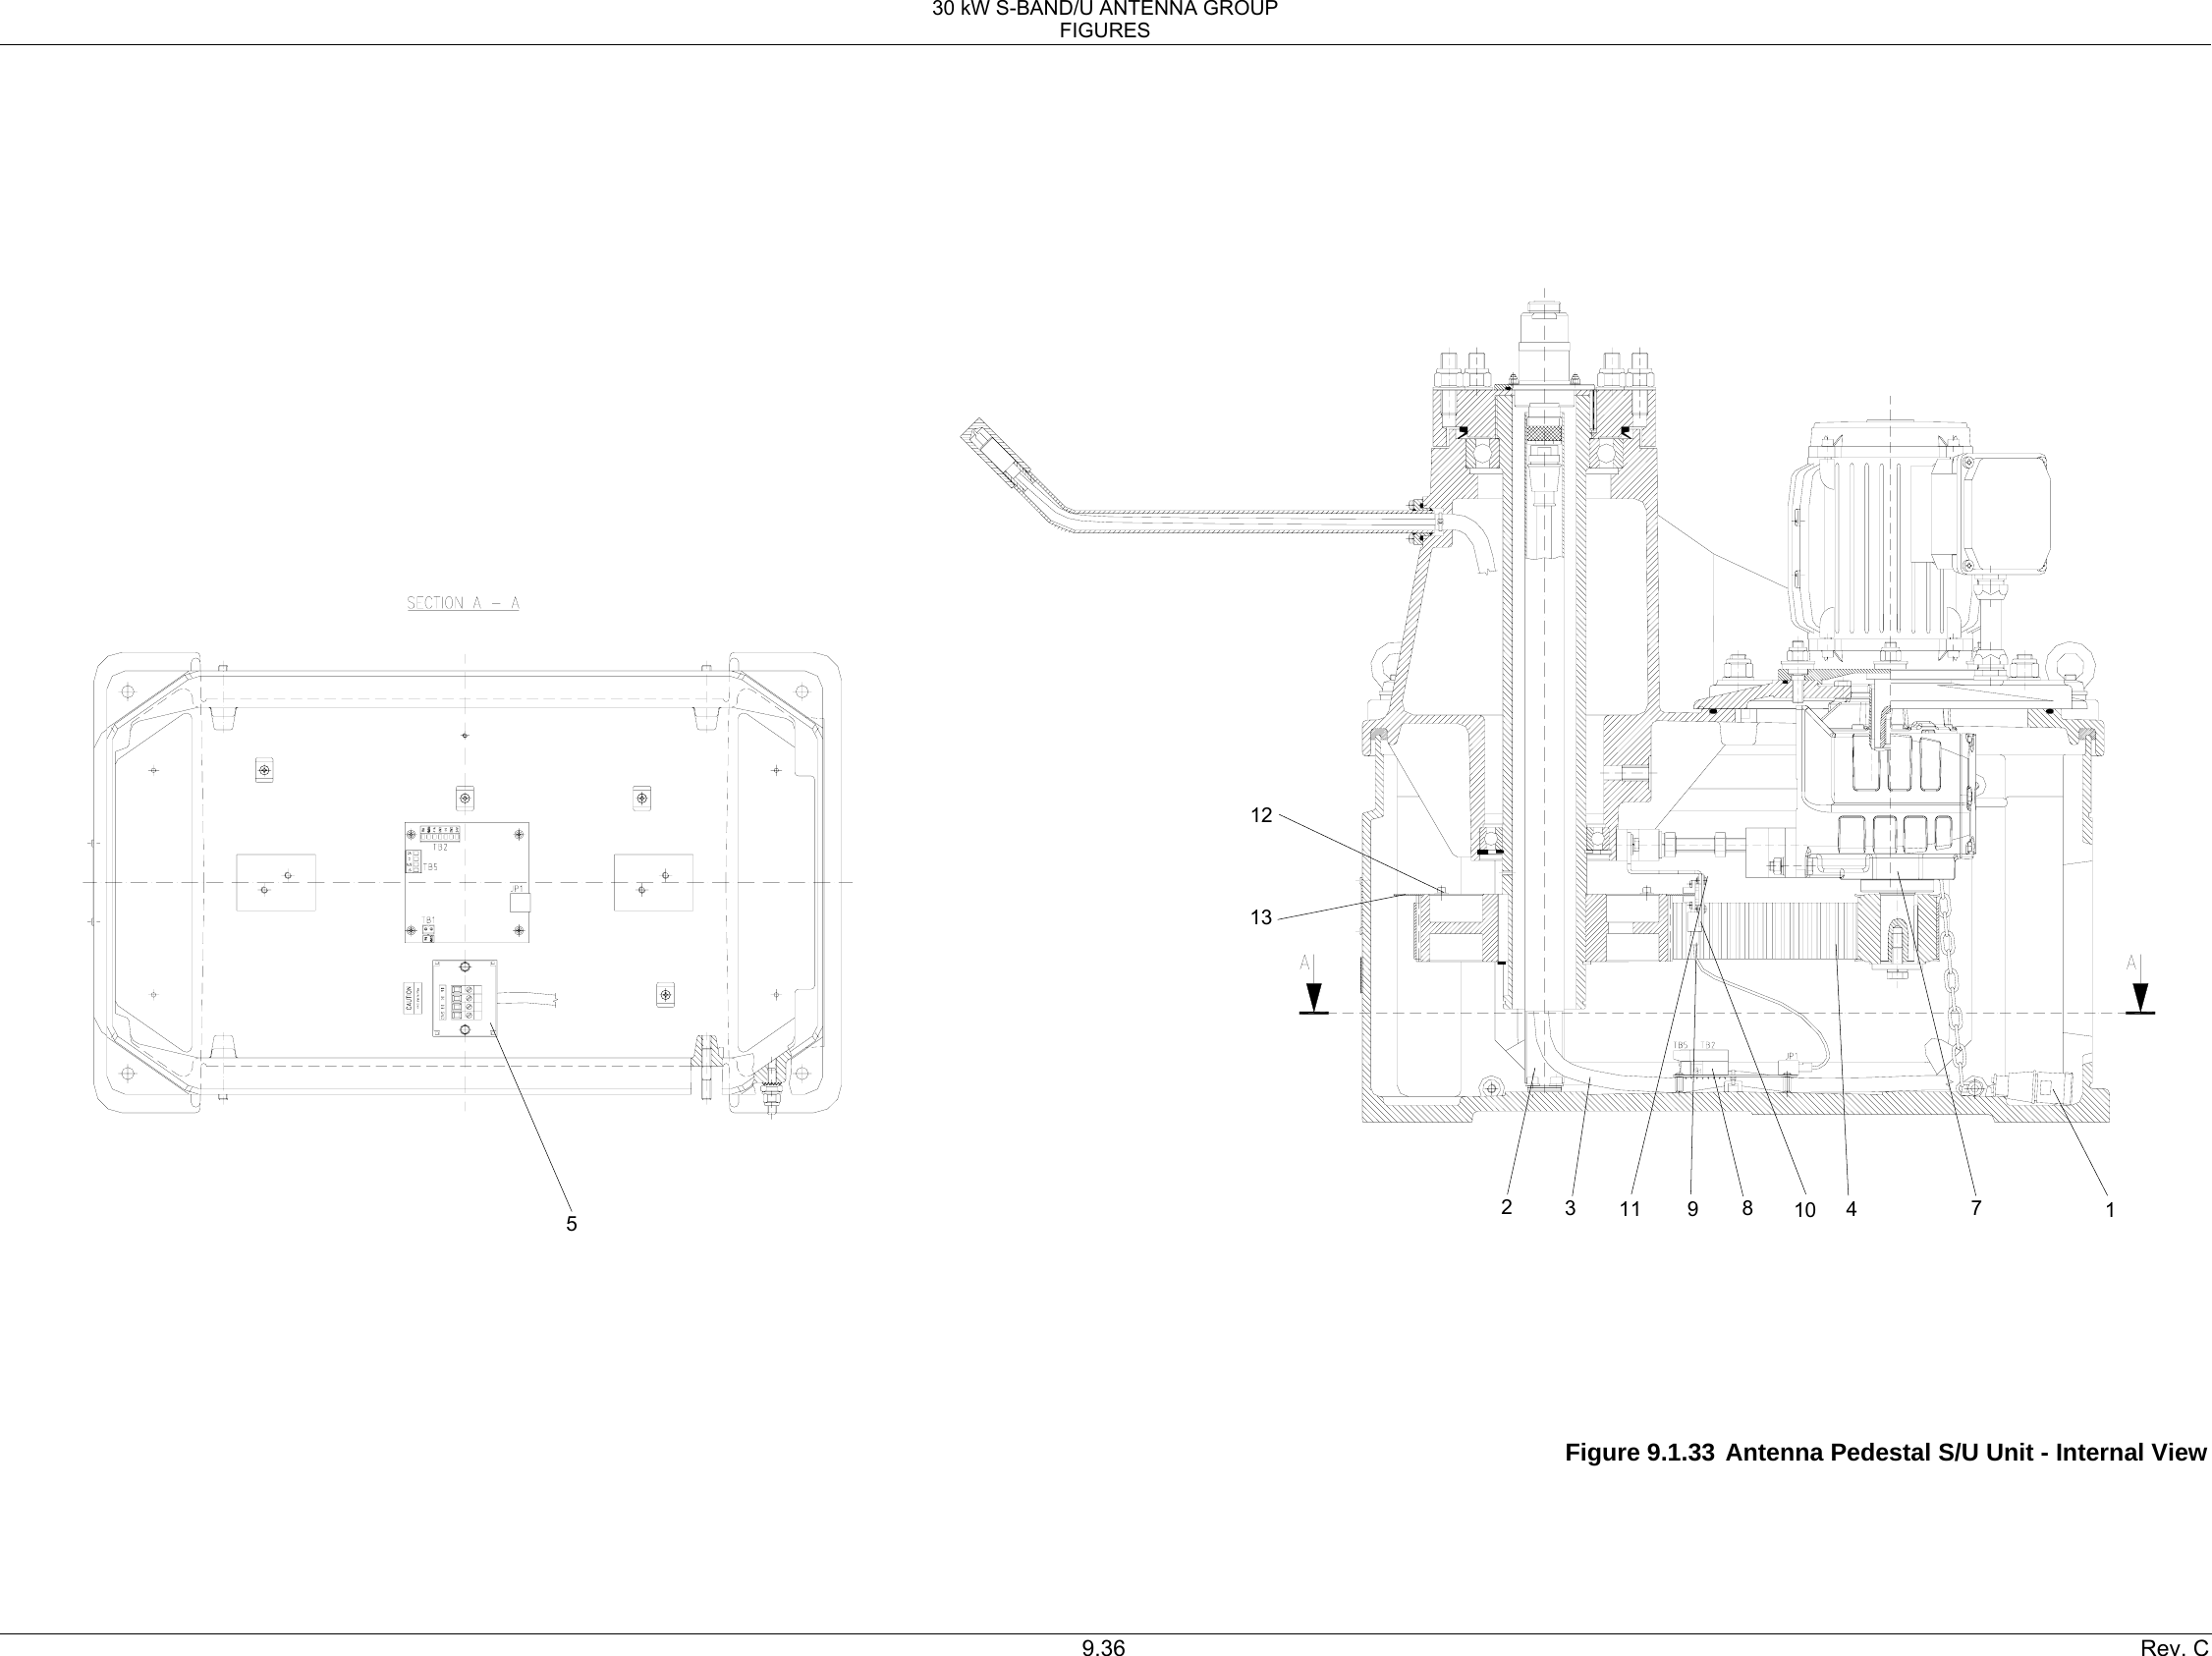 30 kW S-BAND/U ANTENNA GROUP FIGURES 9.36  Rev. C                                                            Figure 9.1.33 Antenna Pedestal S/U Unit - Internal View 7 9  8  4 3  1 12 13 11  10 5  2 